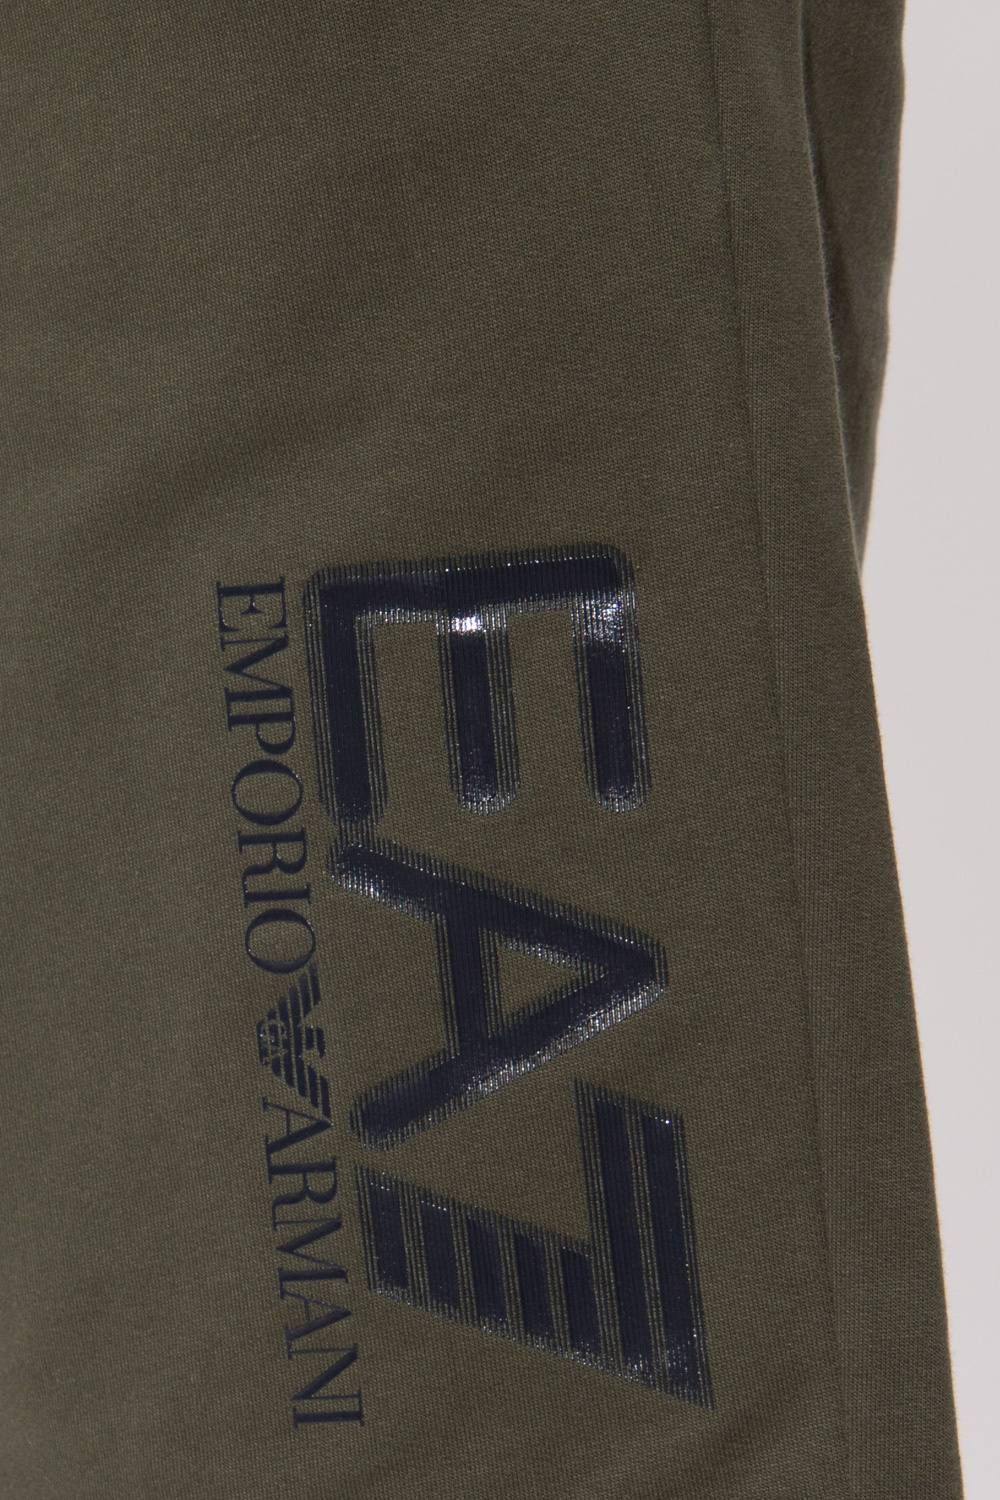 EA7 Emporio Armani Logo-printed shorts